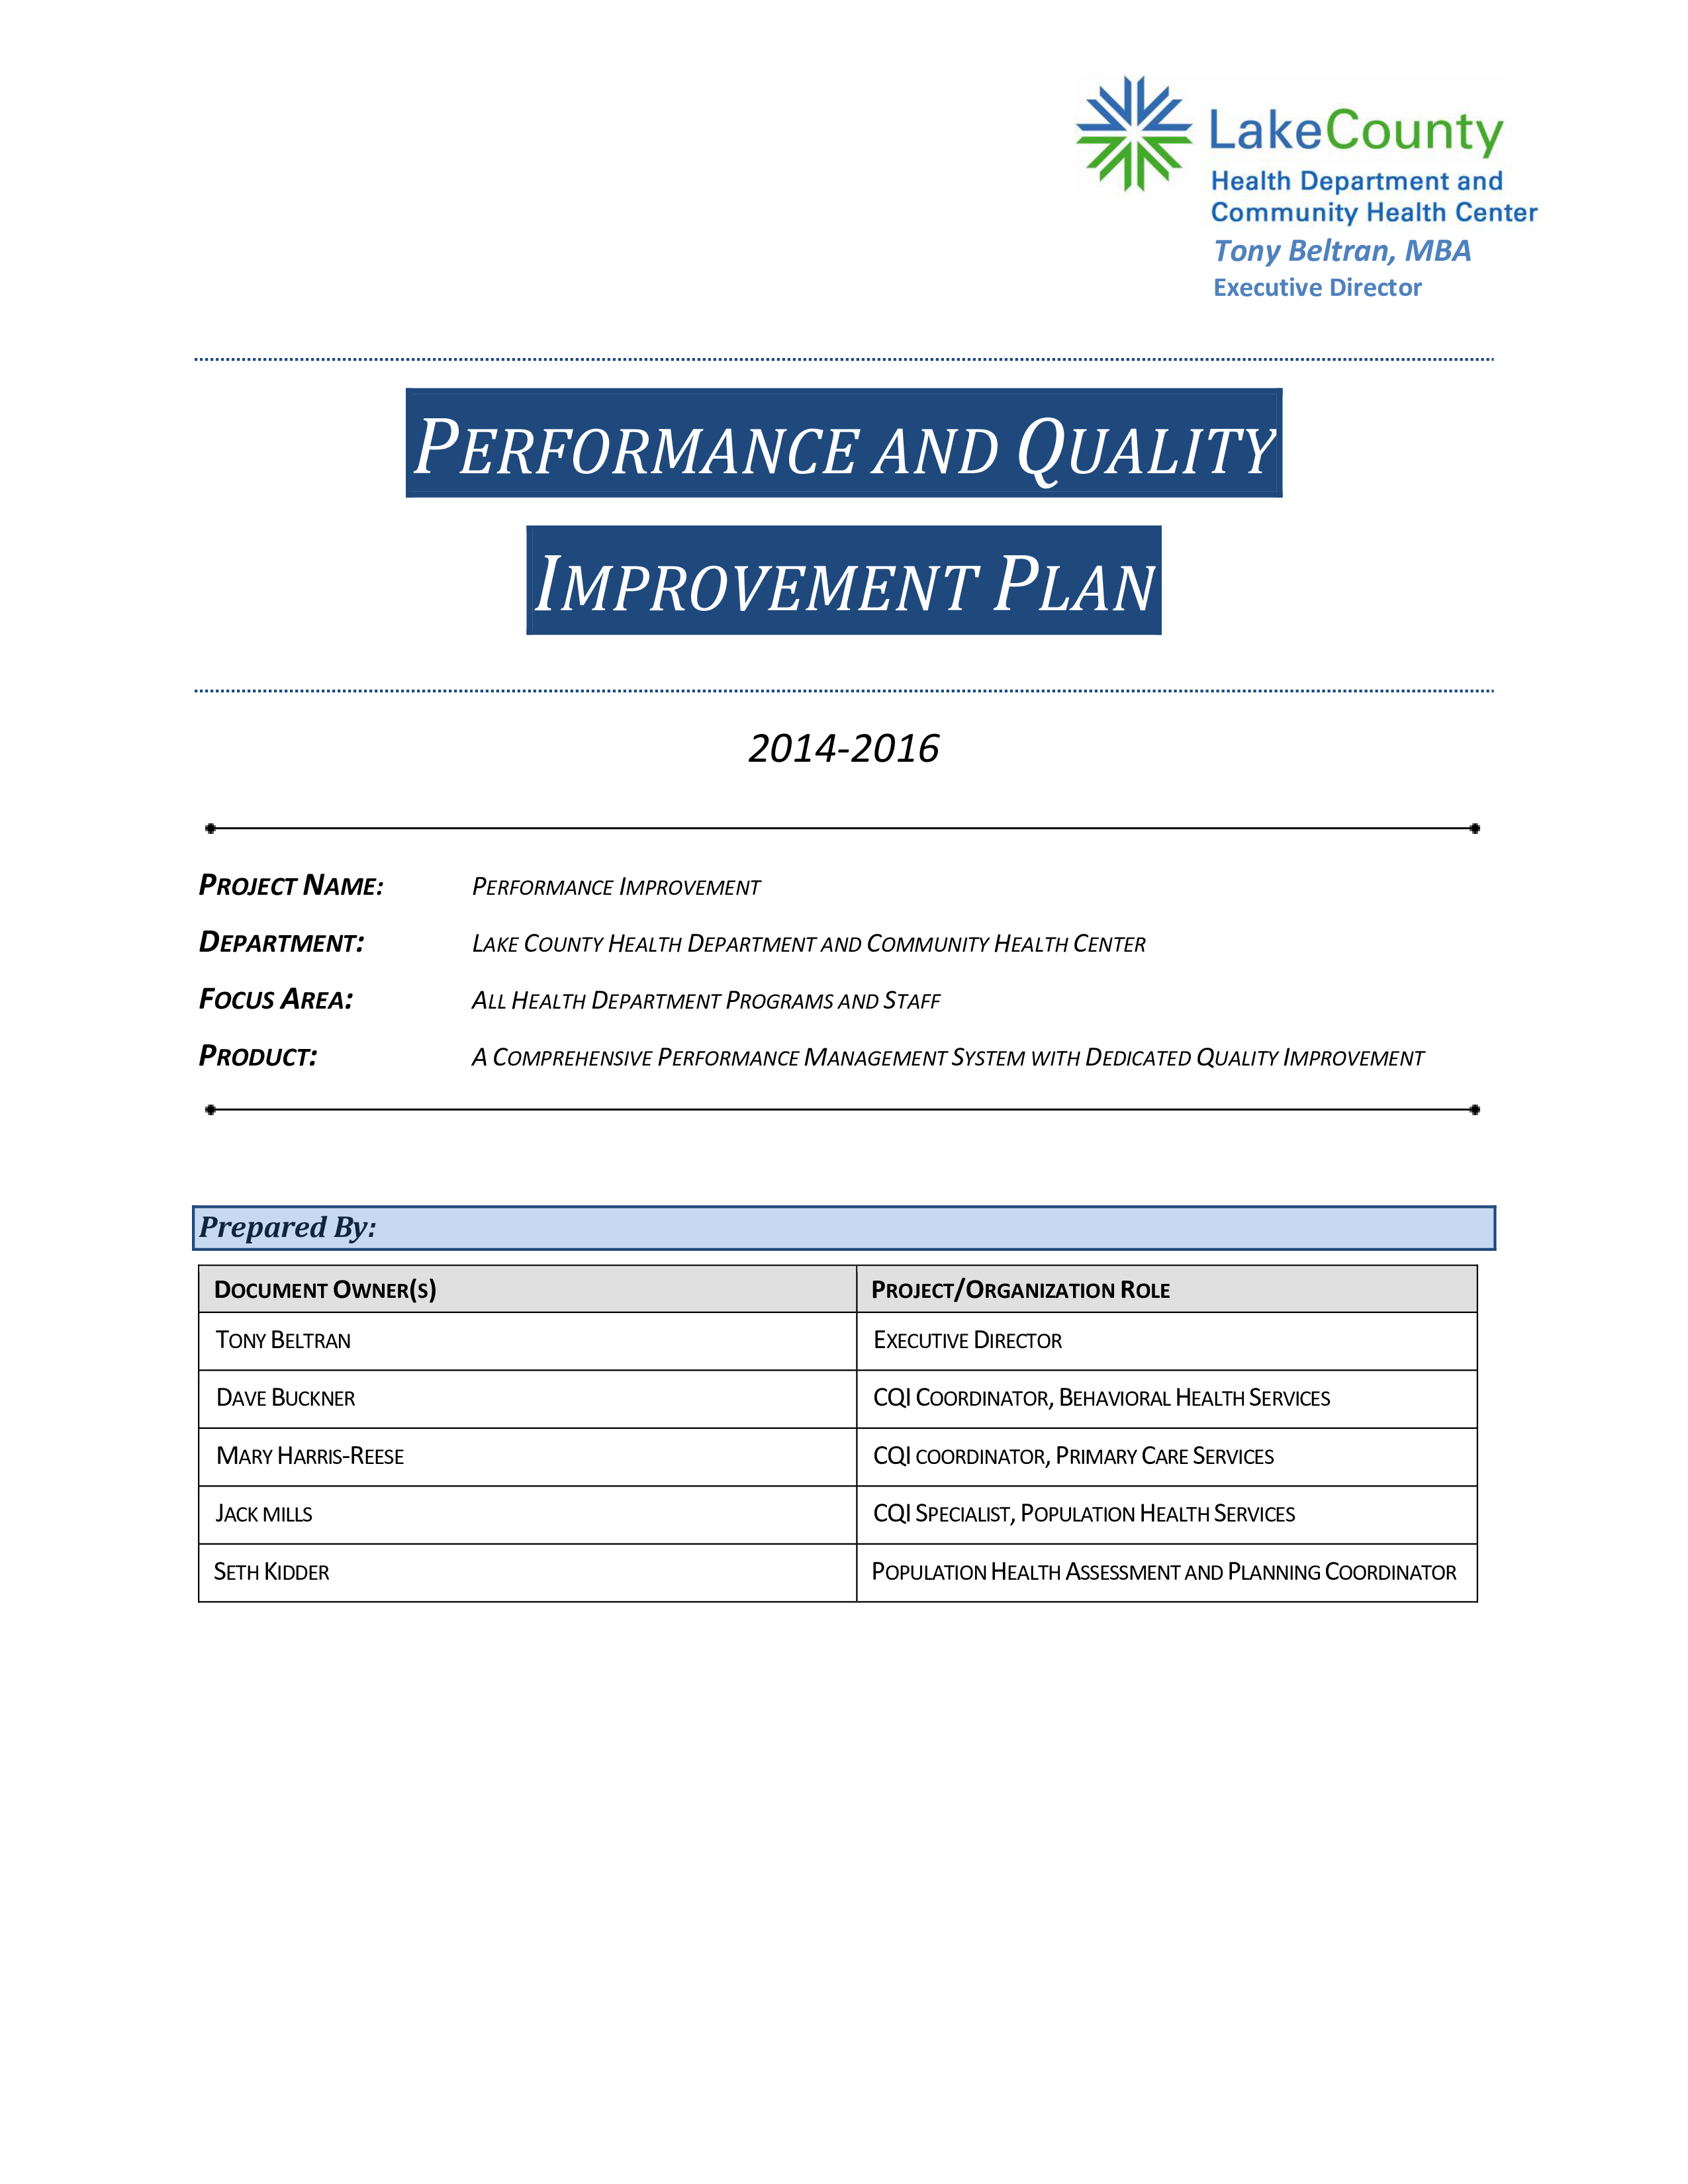 Management Performance Improvement Plan main image